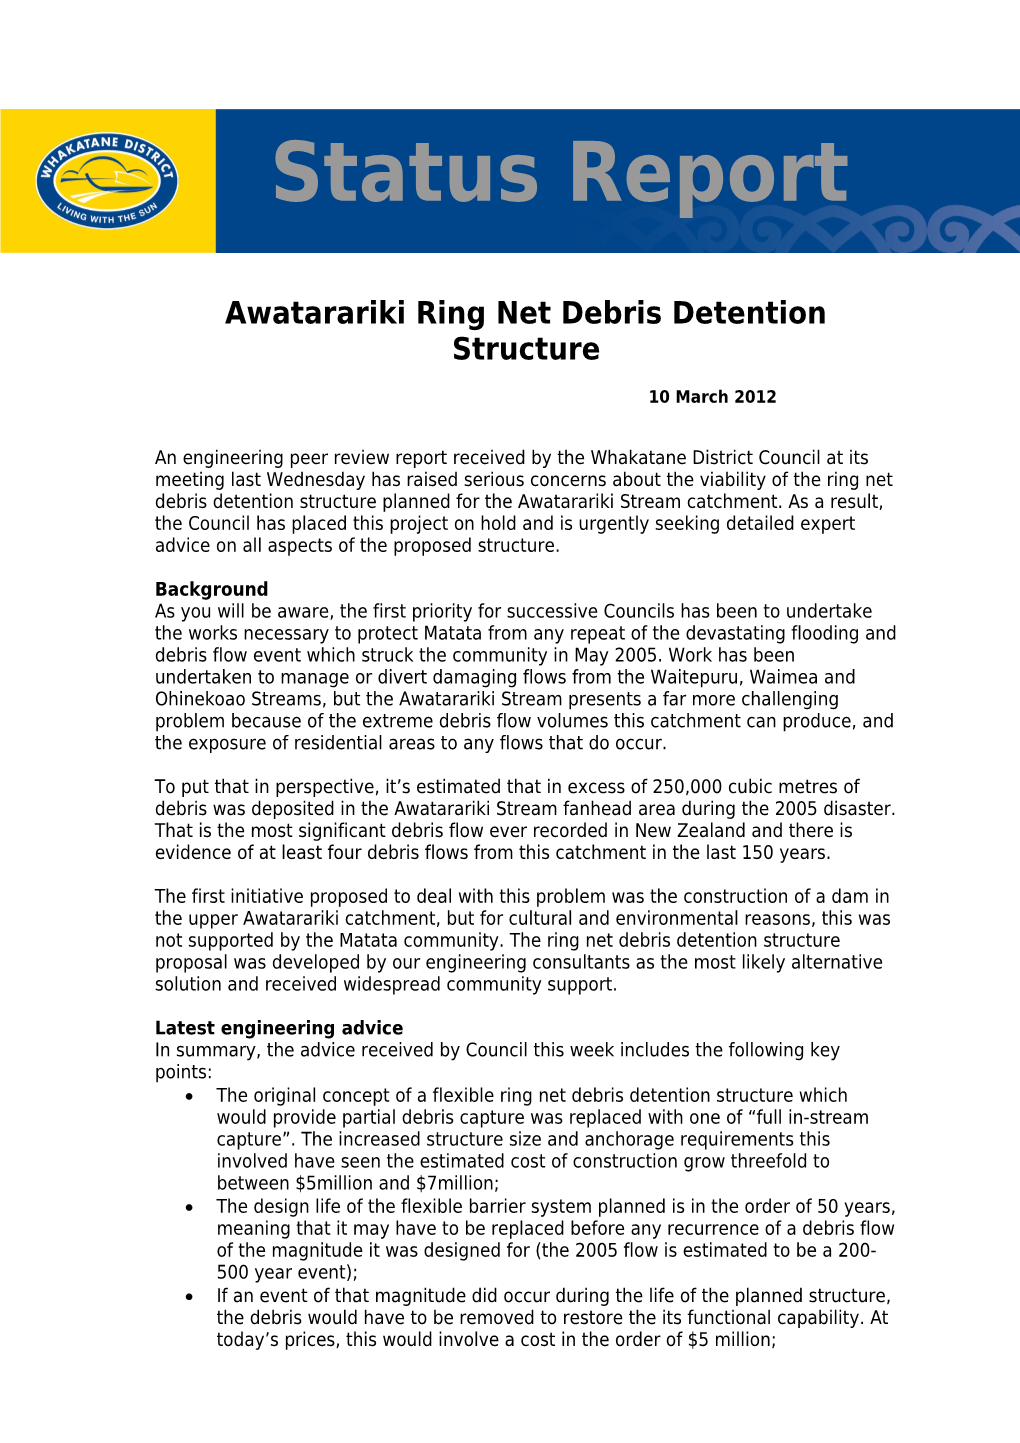 Awatarariki Ring Net Debris Detention Structure